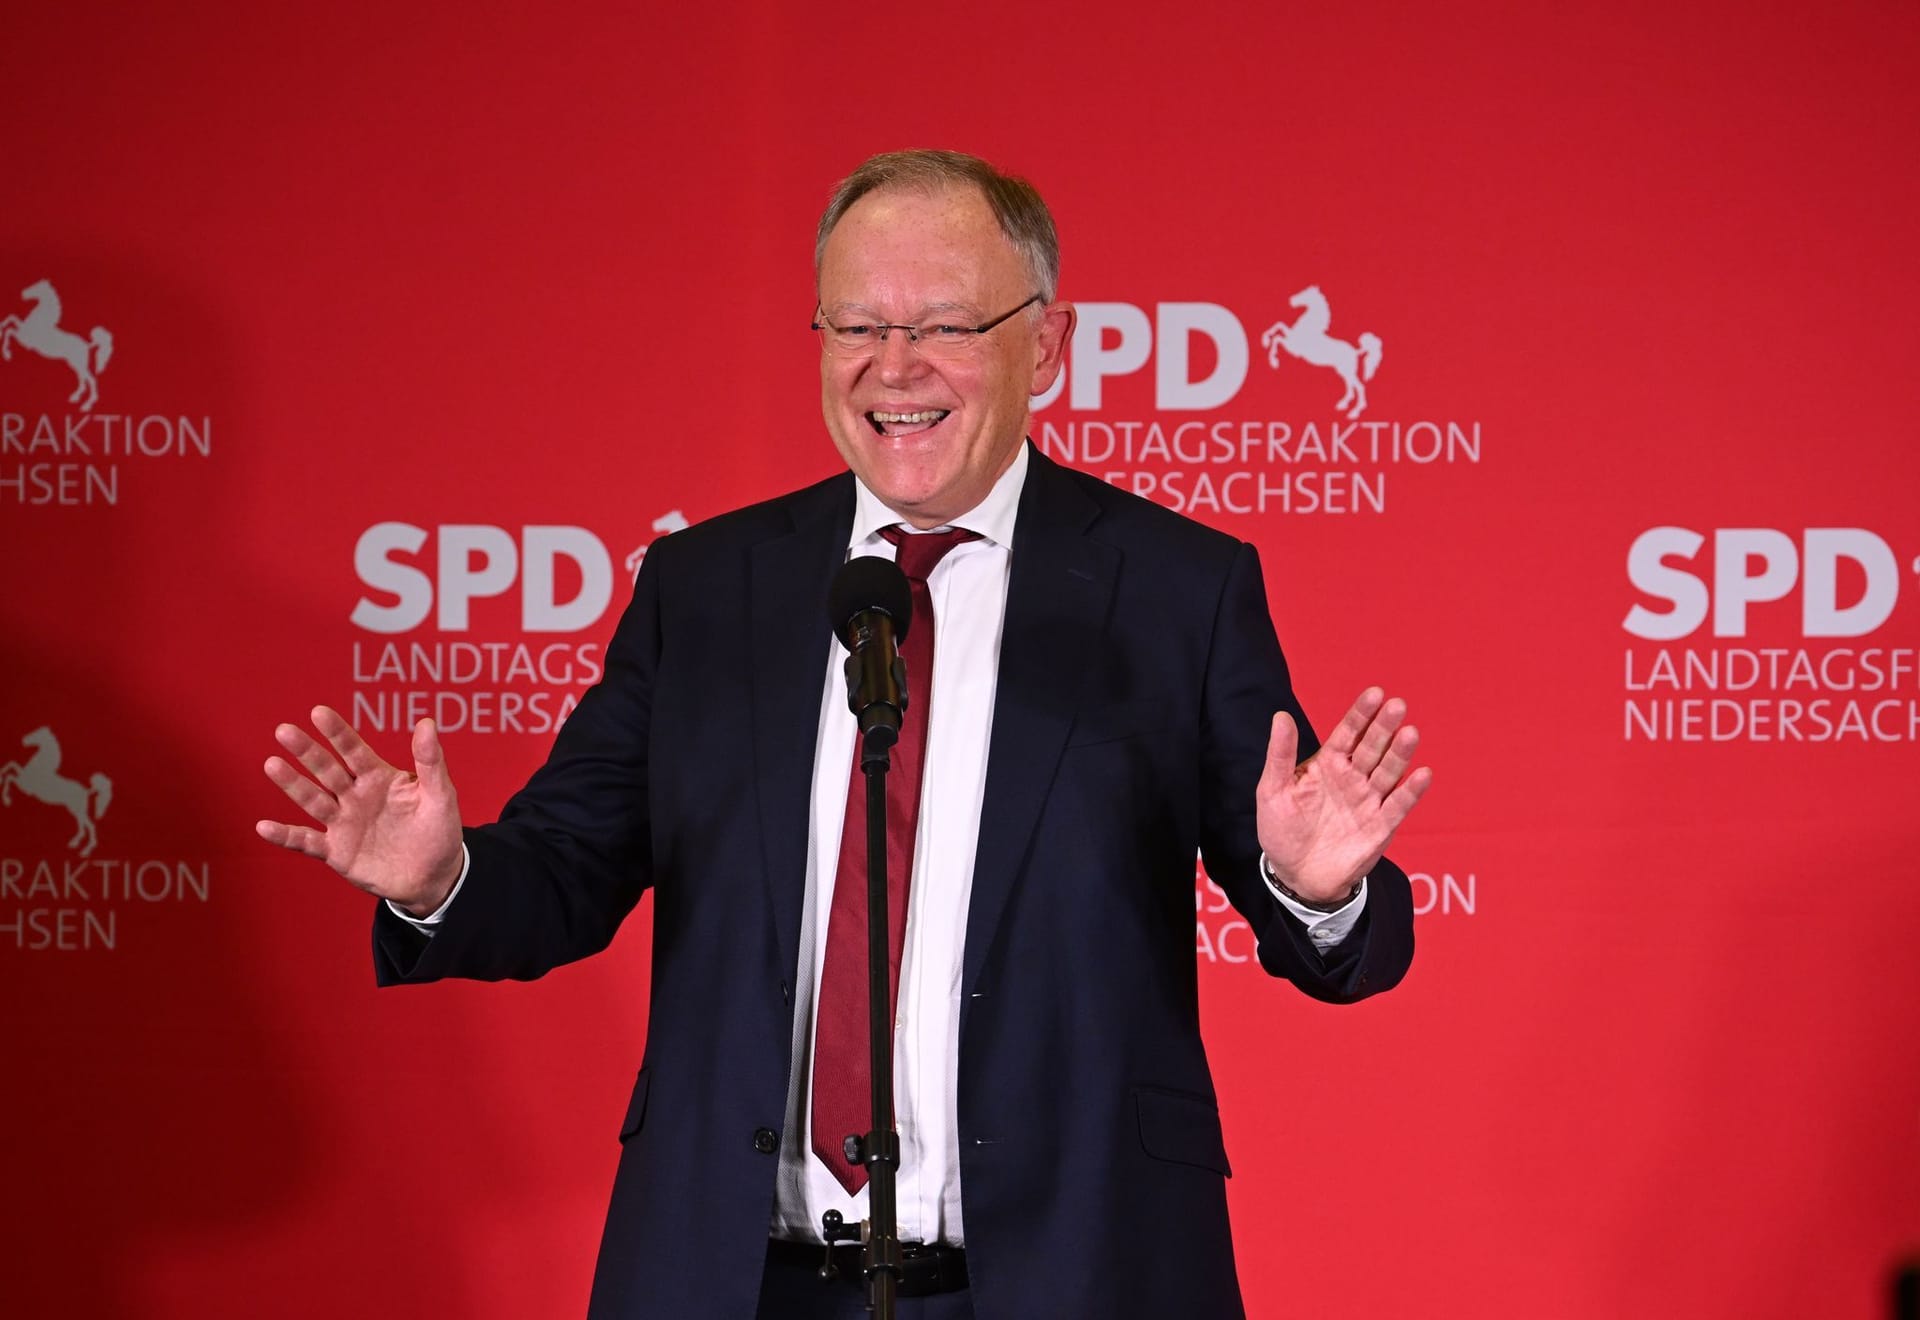 Landtagswahl in Niedersachsen - SPD